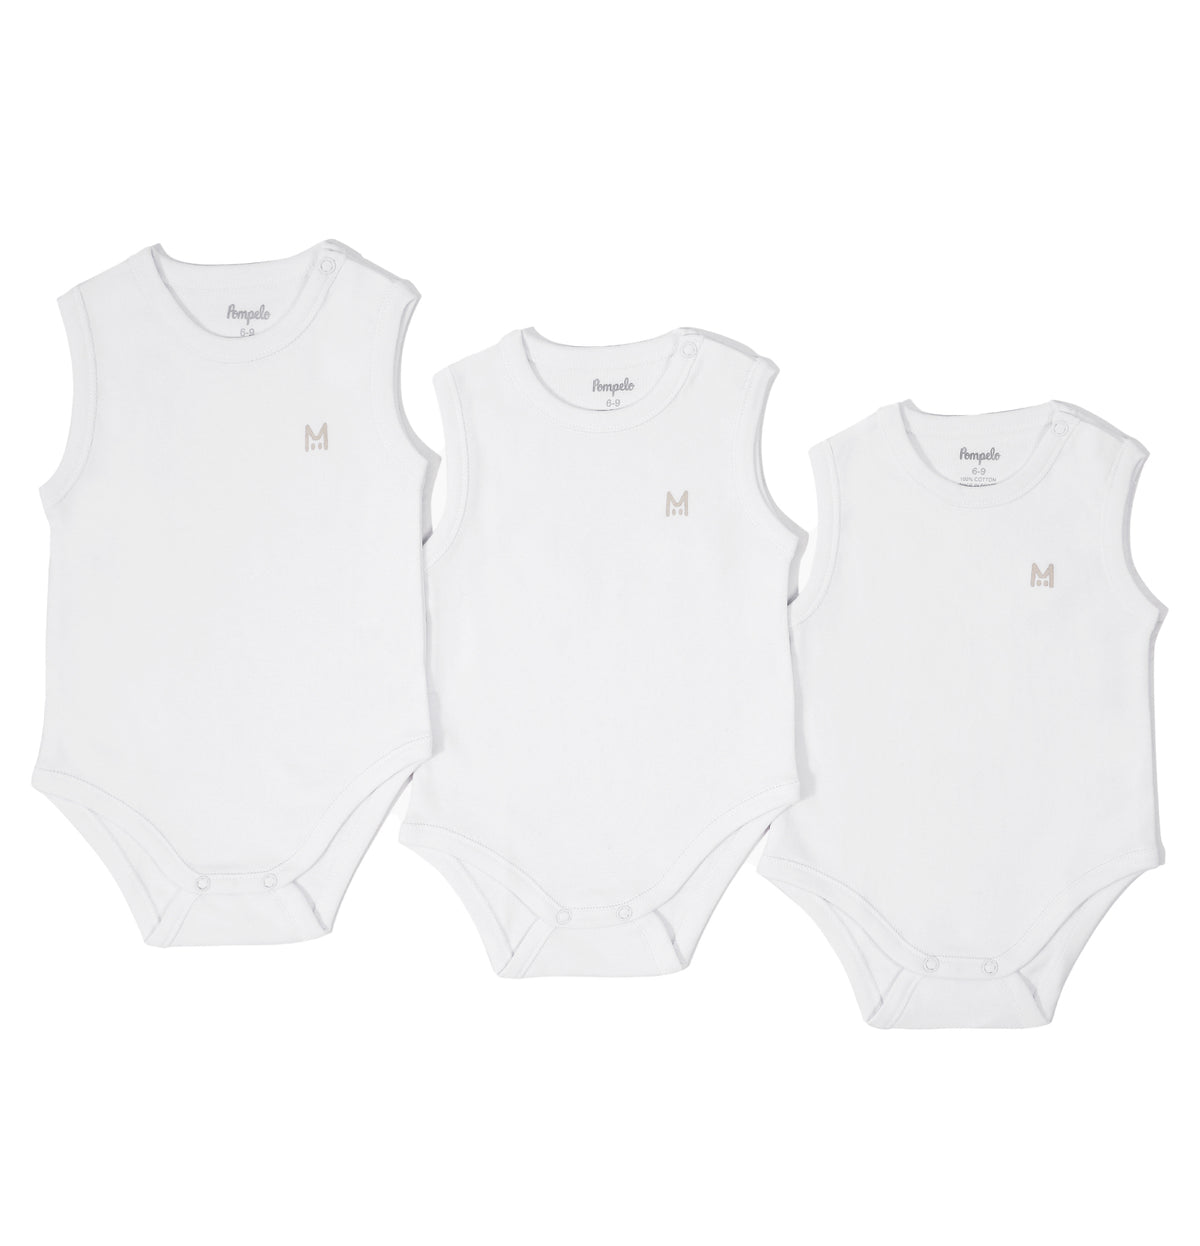 New born soft cotton white plain sleeveless set of 3 overalls by Pompelo